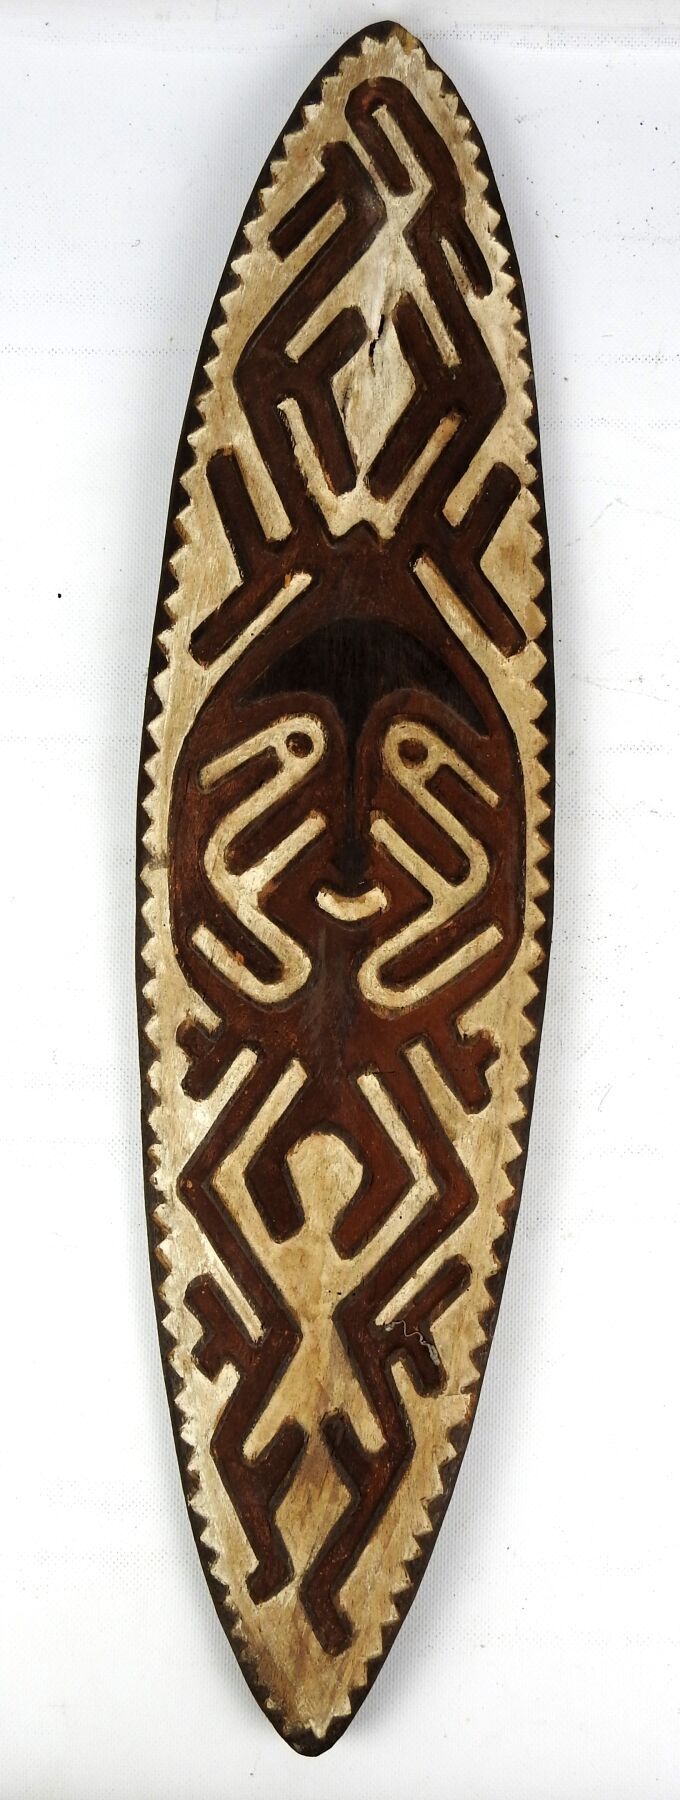 Null Votive board " Gope ", GULF OF PAPUA, Papua New Guinea.
Wood, polychrome pi&hellip;